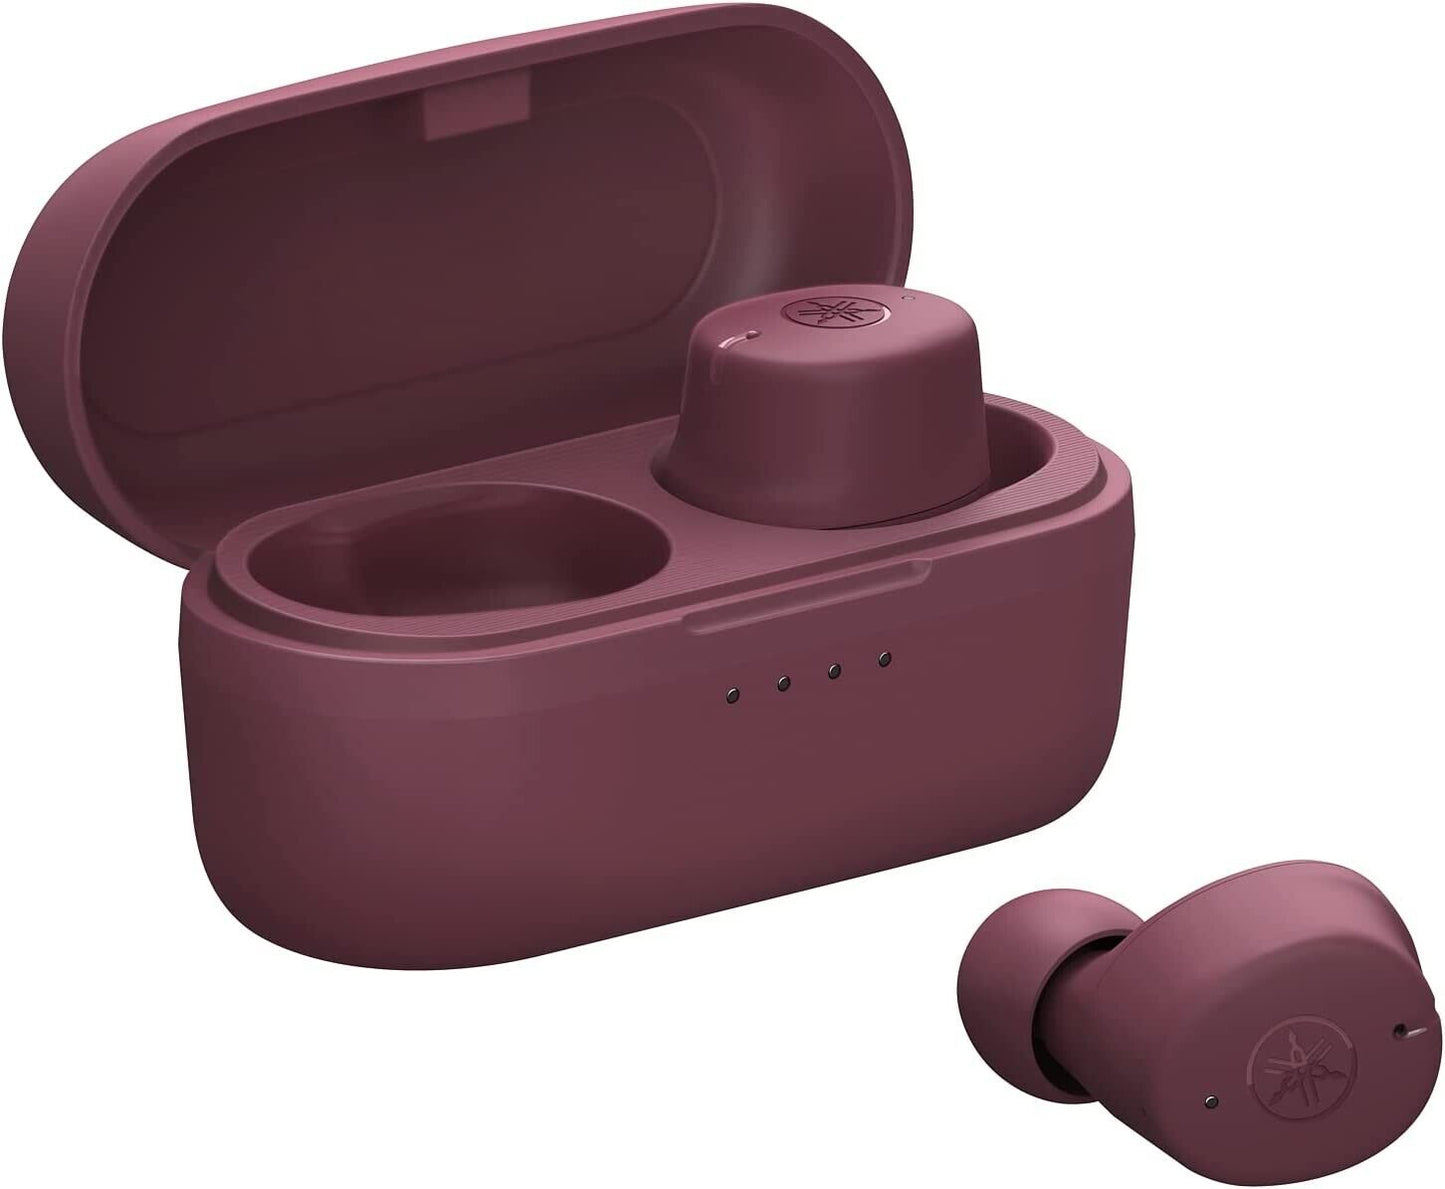 YAMAHA Wireless Earphone TW-E3C True Sound Waterproof Gaming Mode Raspberry red